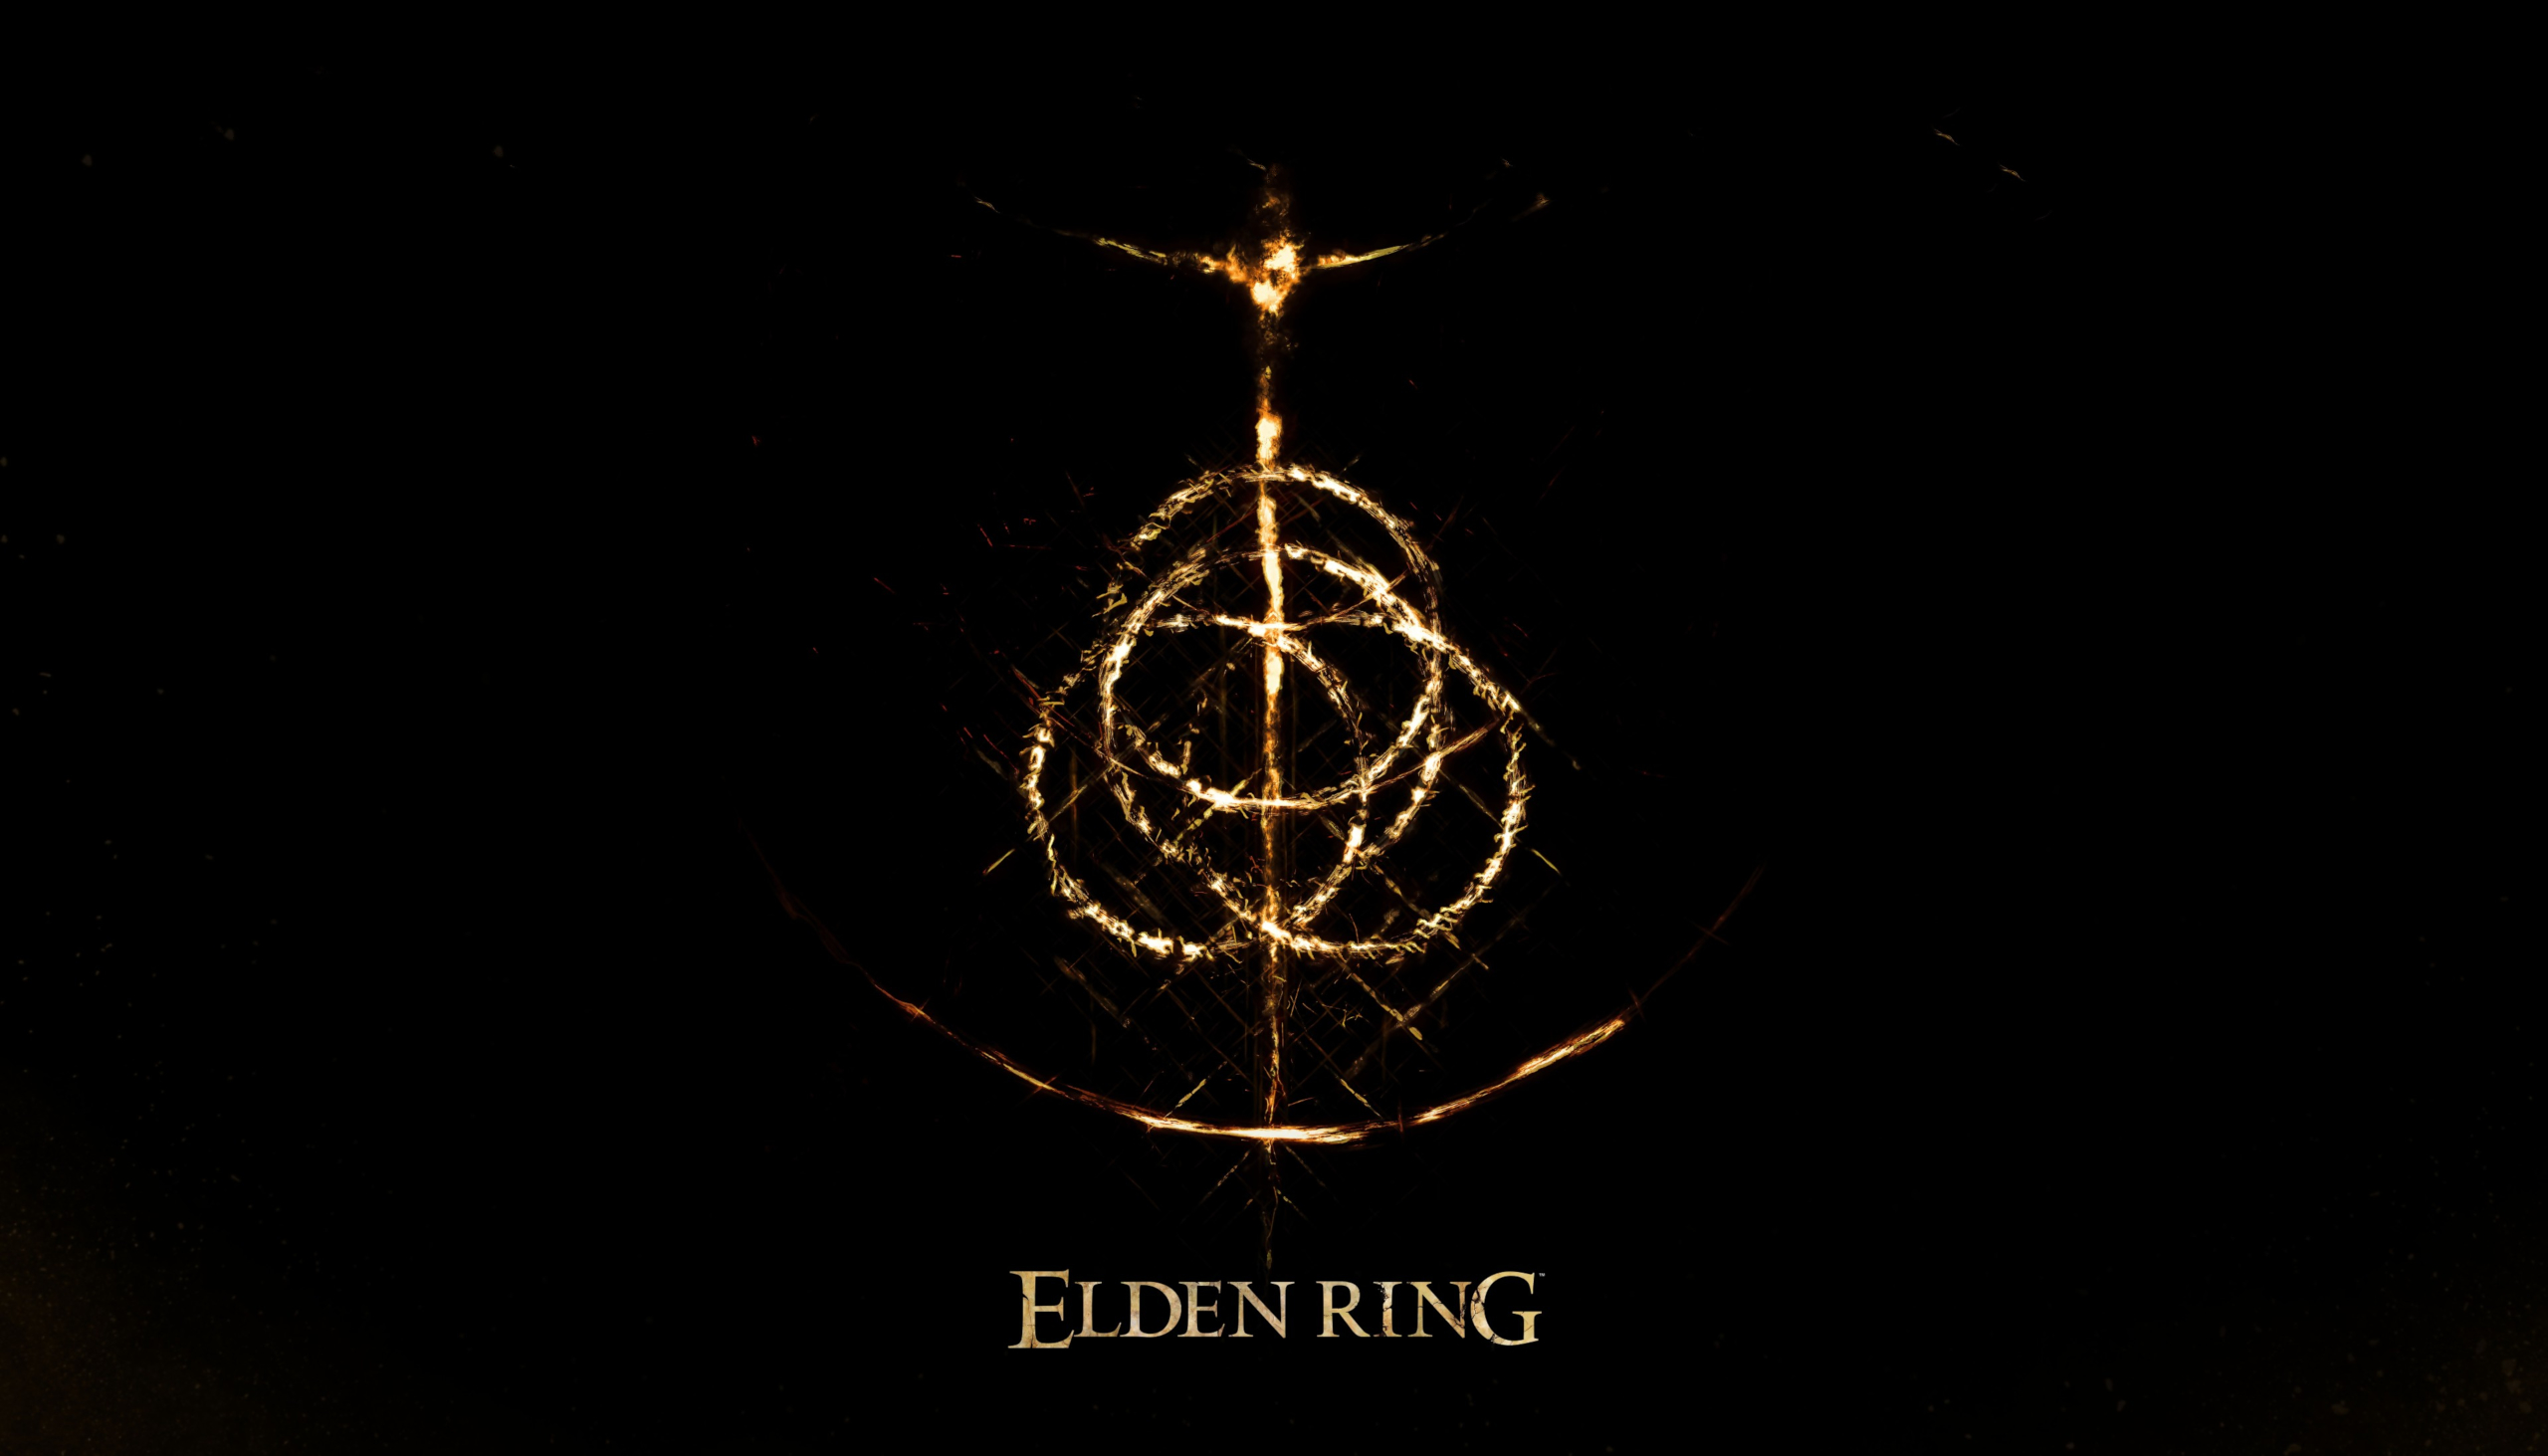 Ultimate Elden Ring wallpapers for iPhone in 2023  iGeeksBlog